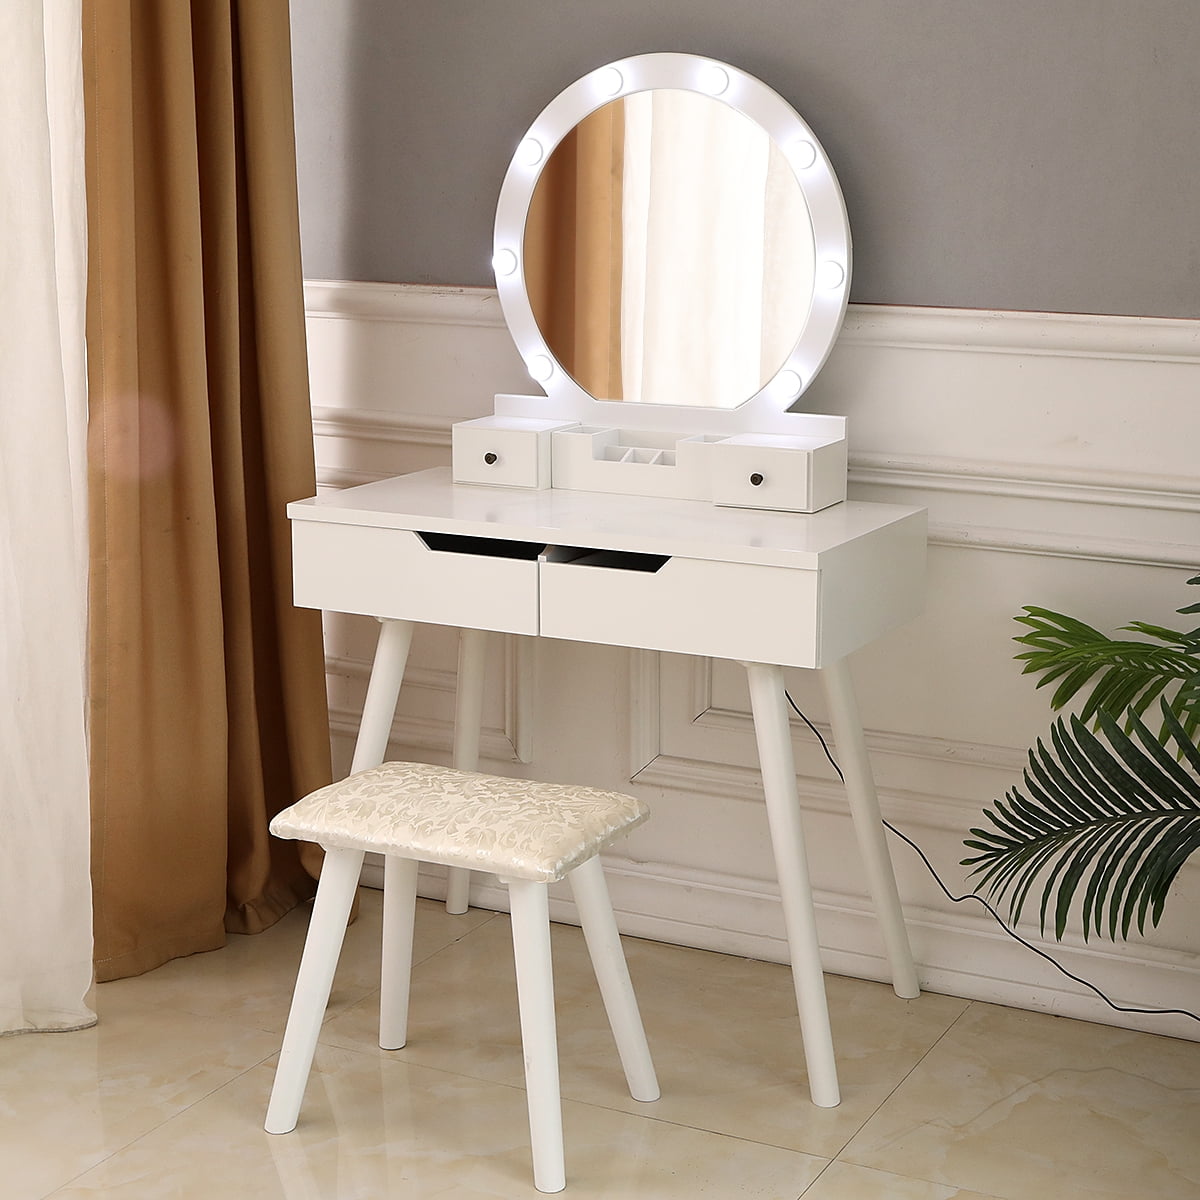 Ktaxon Vanity Set With Round Lighted, White Vanity With Round Mirror